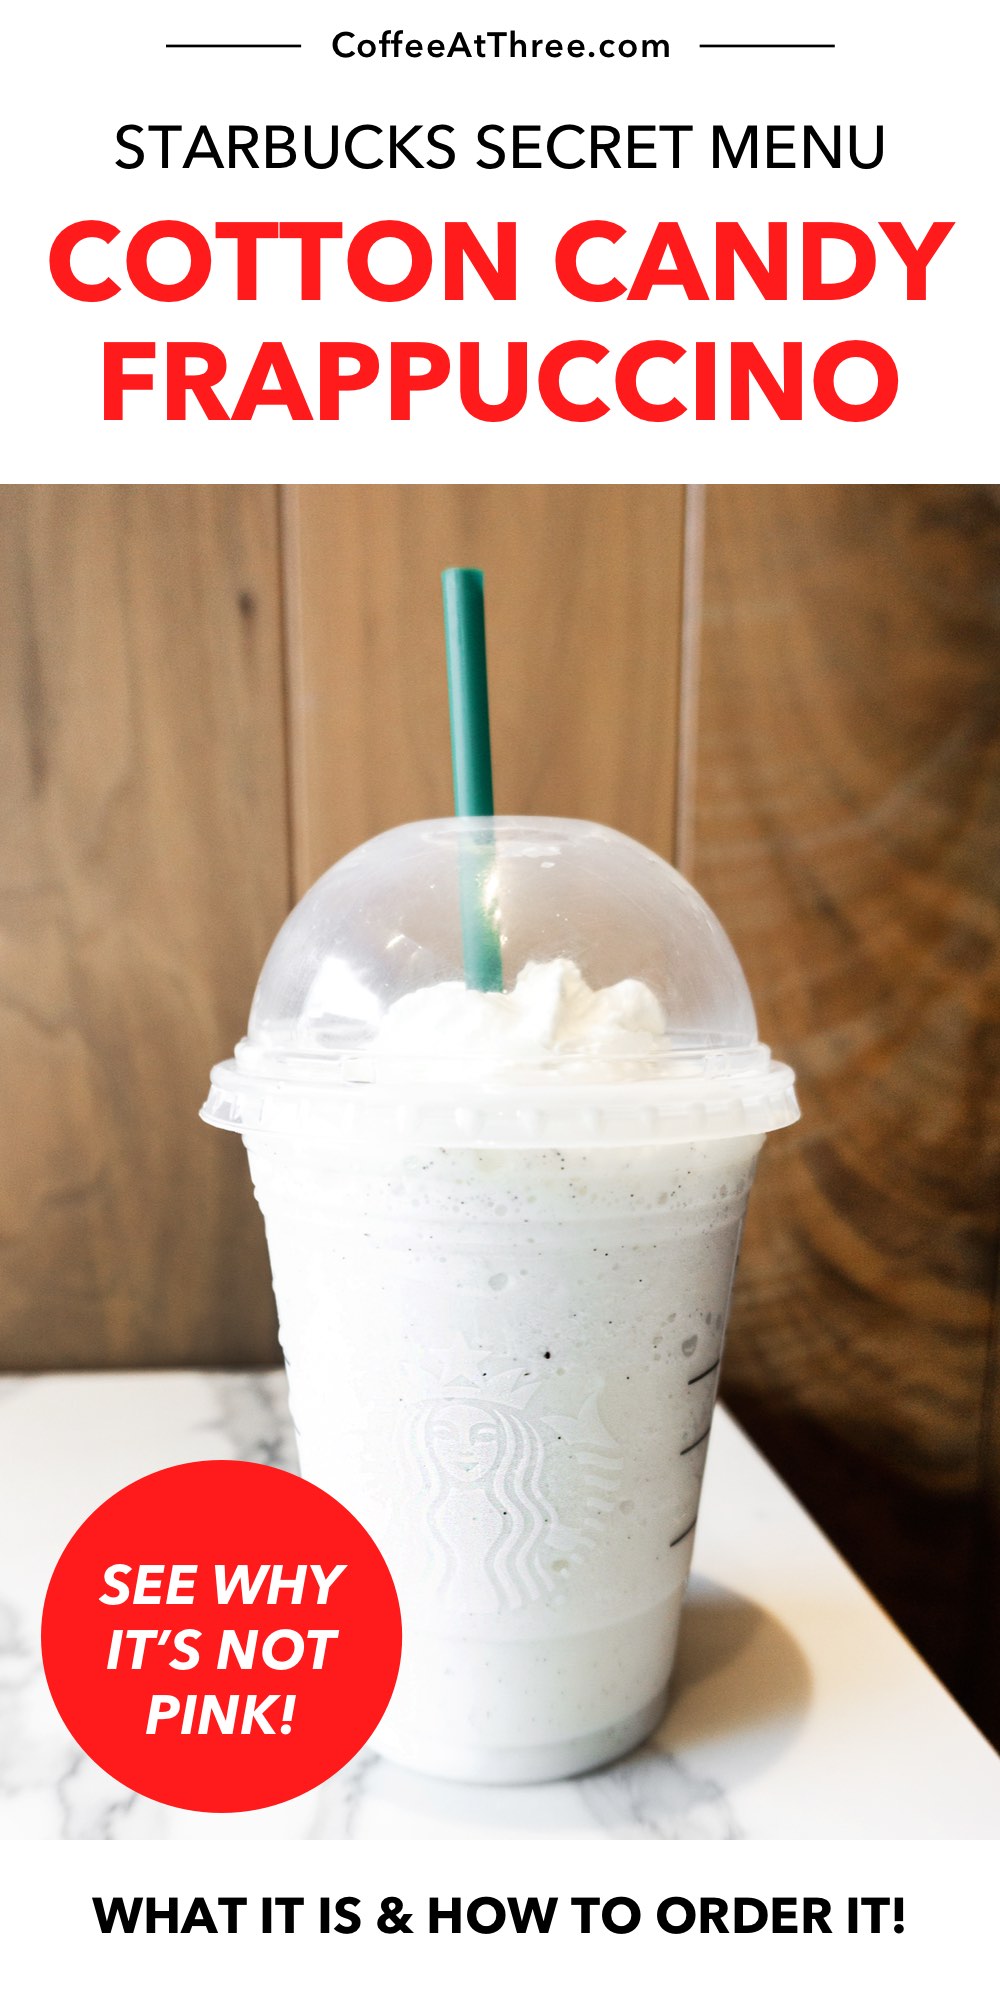 Suikerspin Frappuccino (Starbucks Secret Menu)